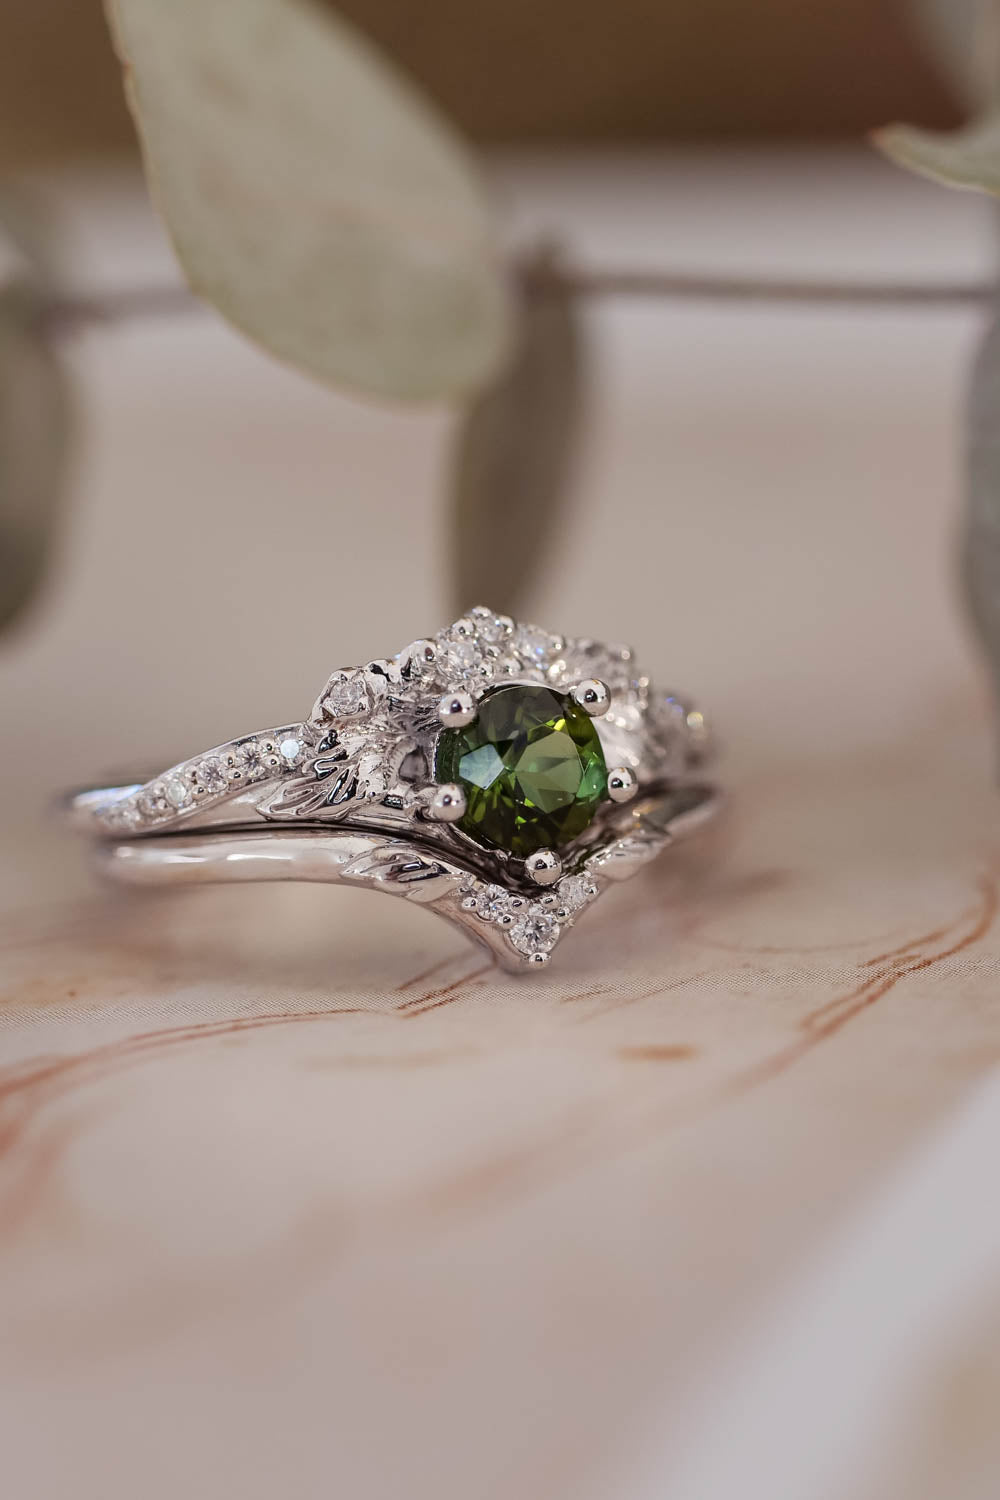 Engagement & wedding ring set with green tourmaline / Amelia - Eden Garden Jewelry™